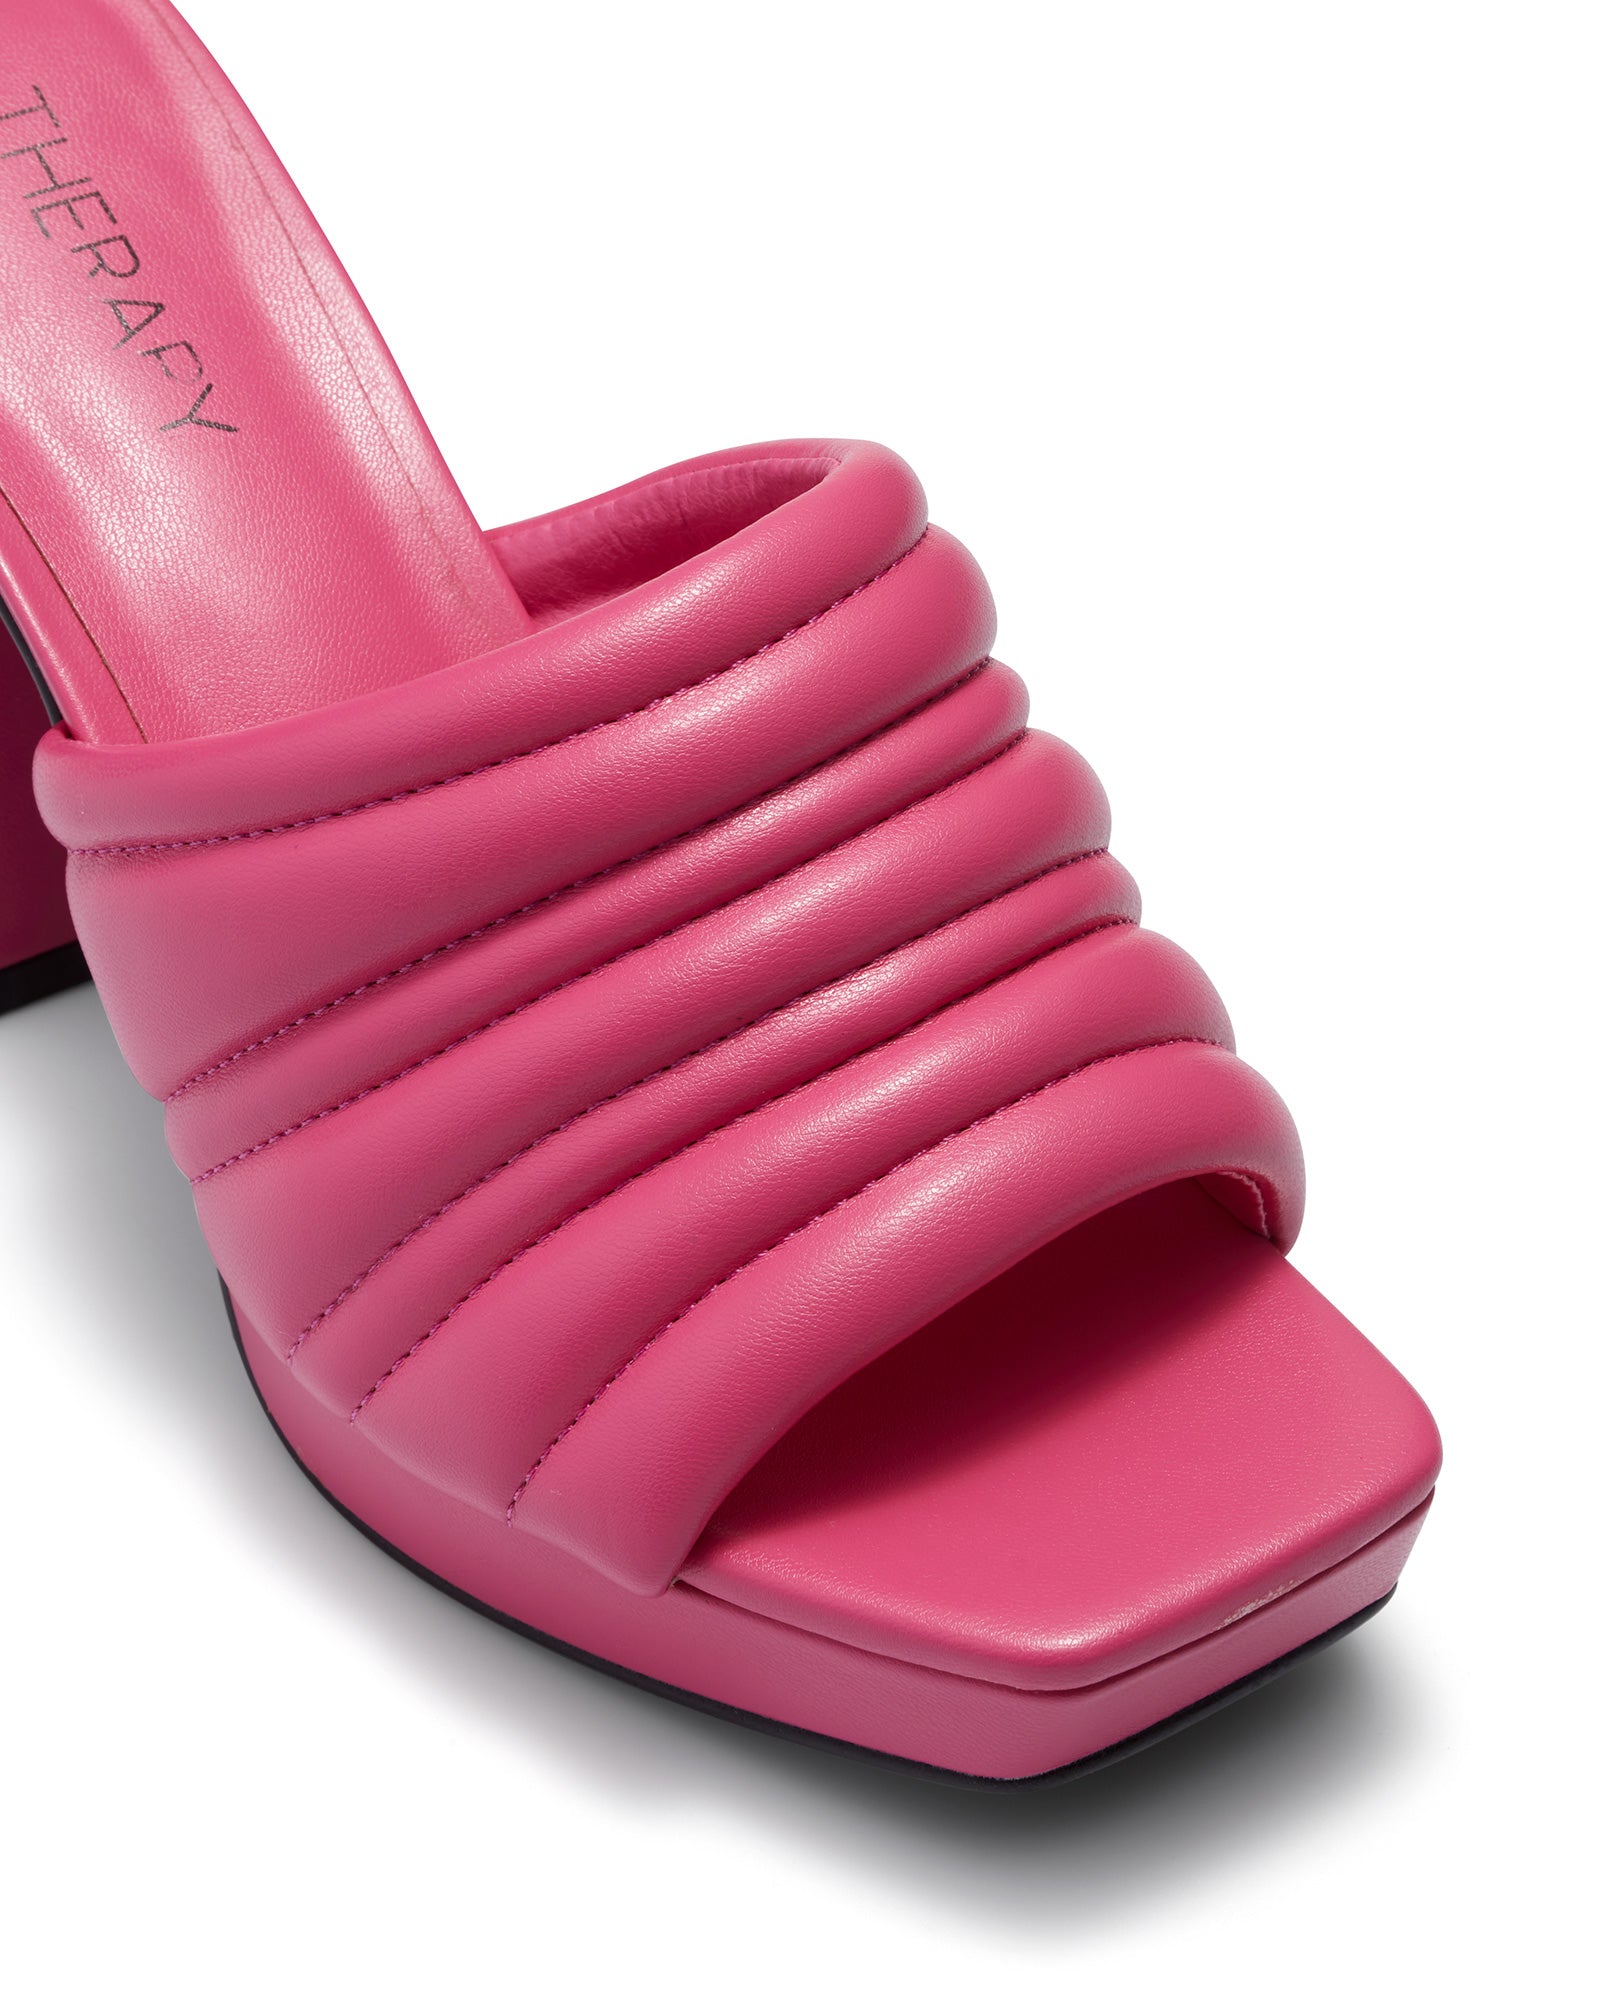 Therapy Shoes Euphoria Pink | Women's Heels | Sandals | Platform | Mule